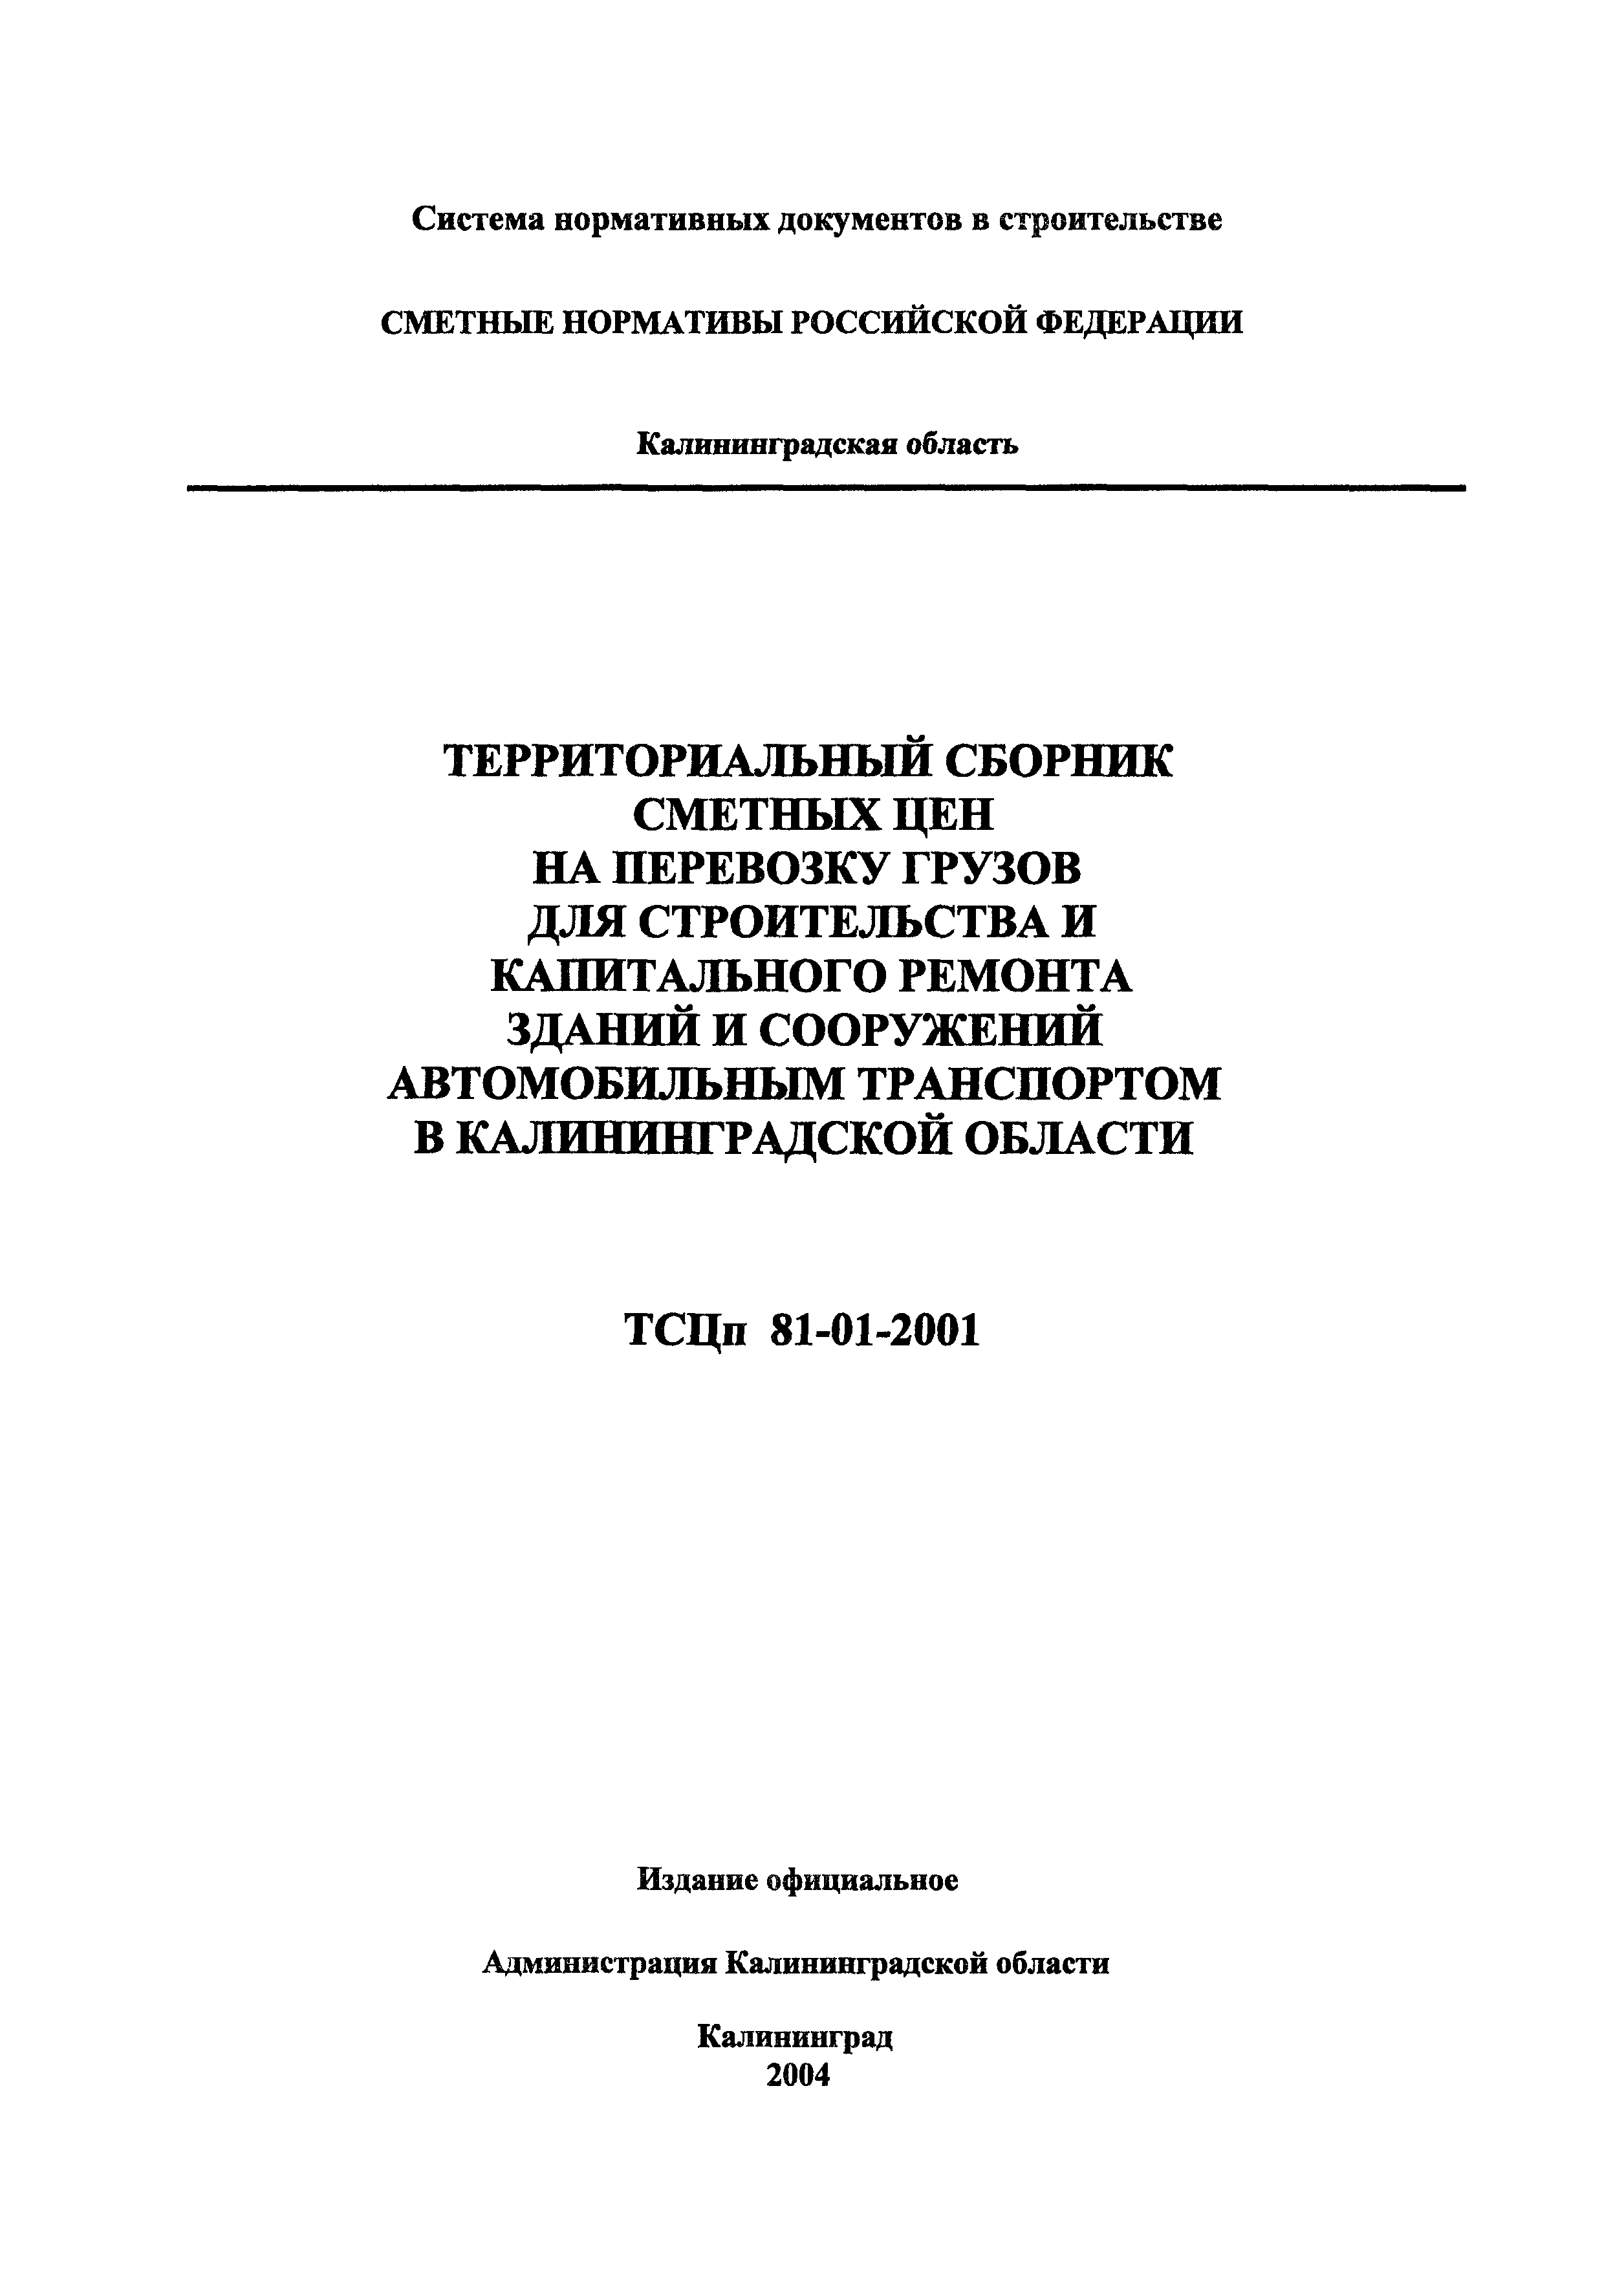 ТСЦп Калининградской области ТСЦп-2001